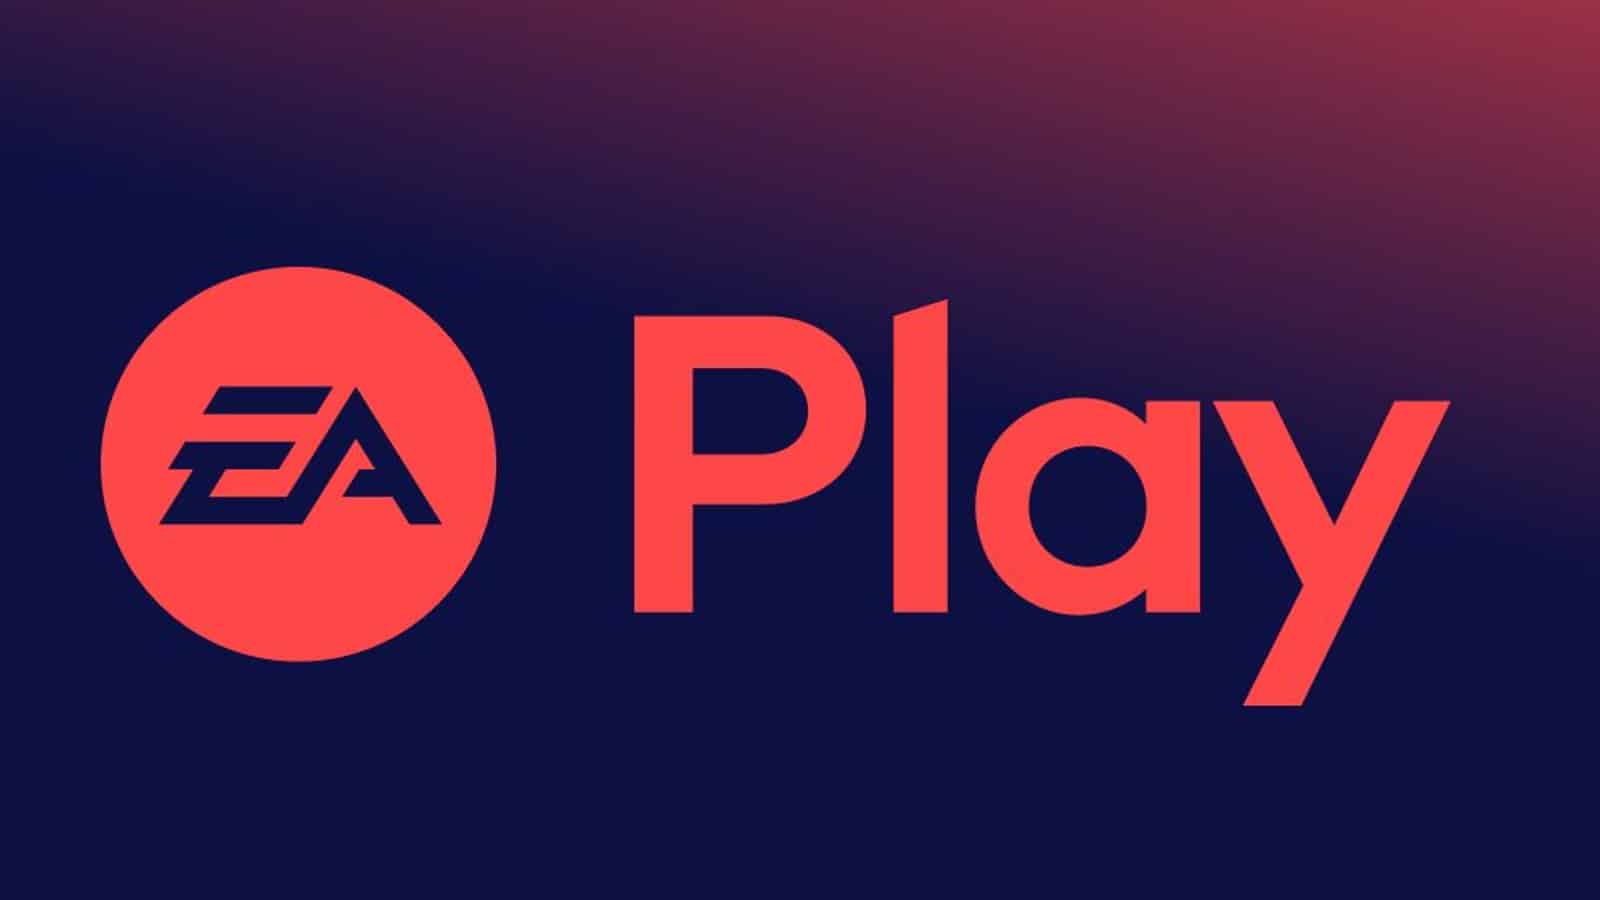 The EA Play logo